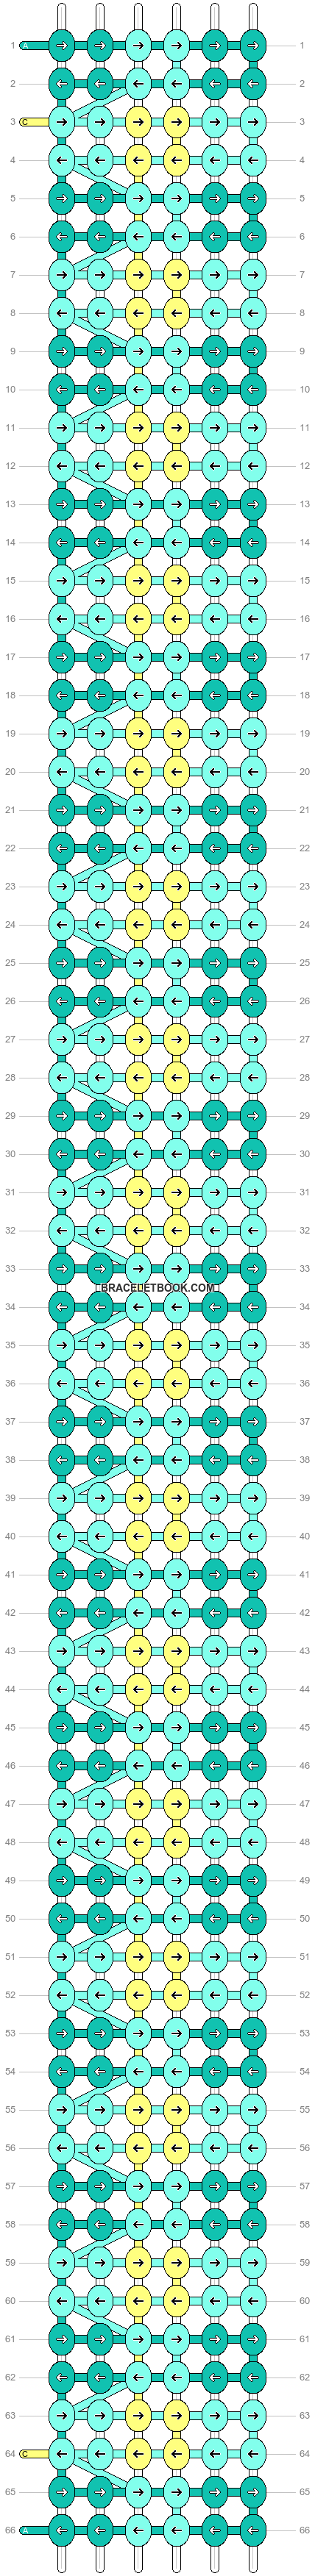 Alpha pattern #80755 variation #162106 pattern